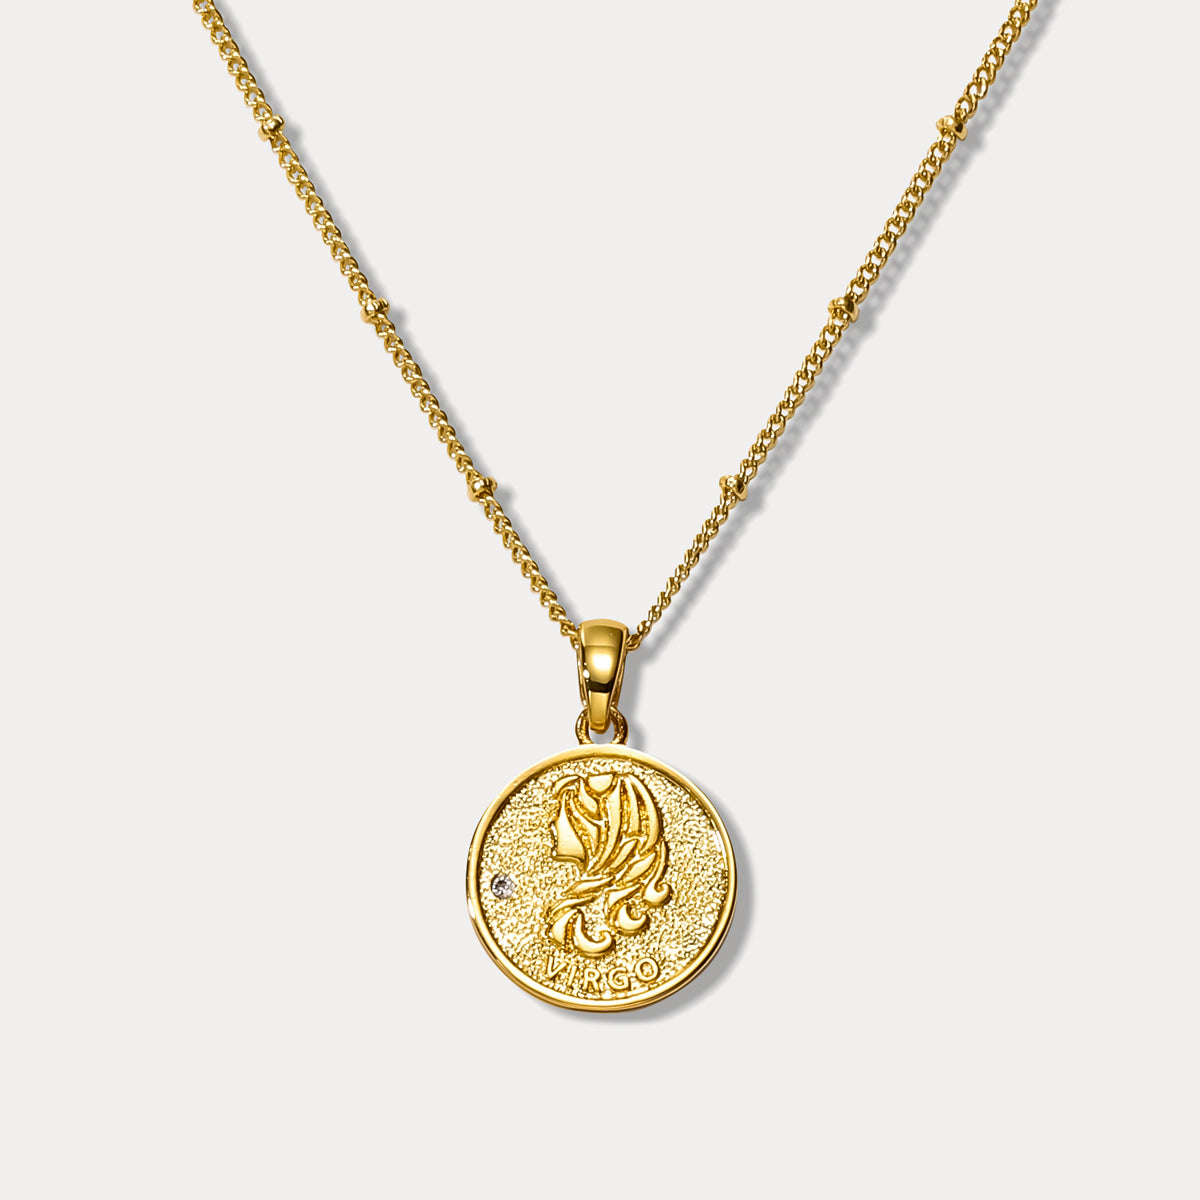 Selenichast virgo constellation coin pendant necklace